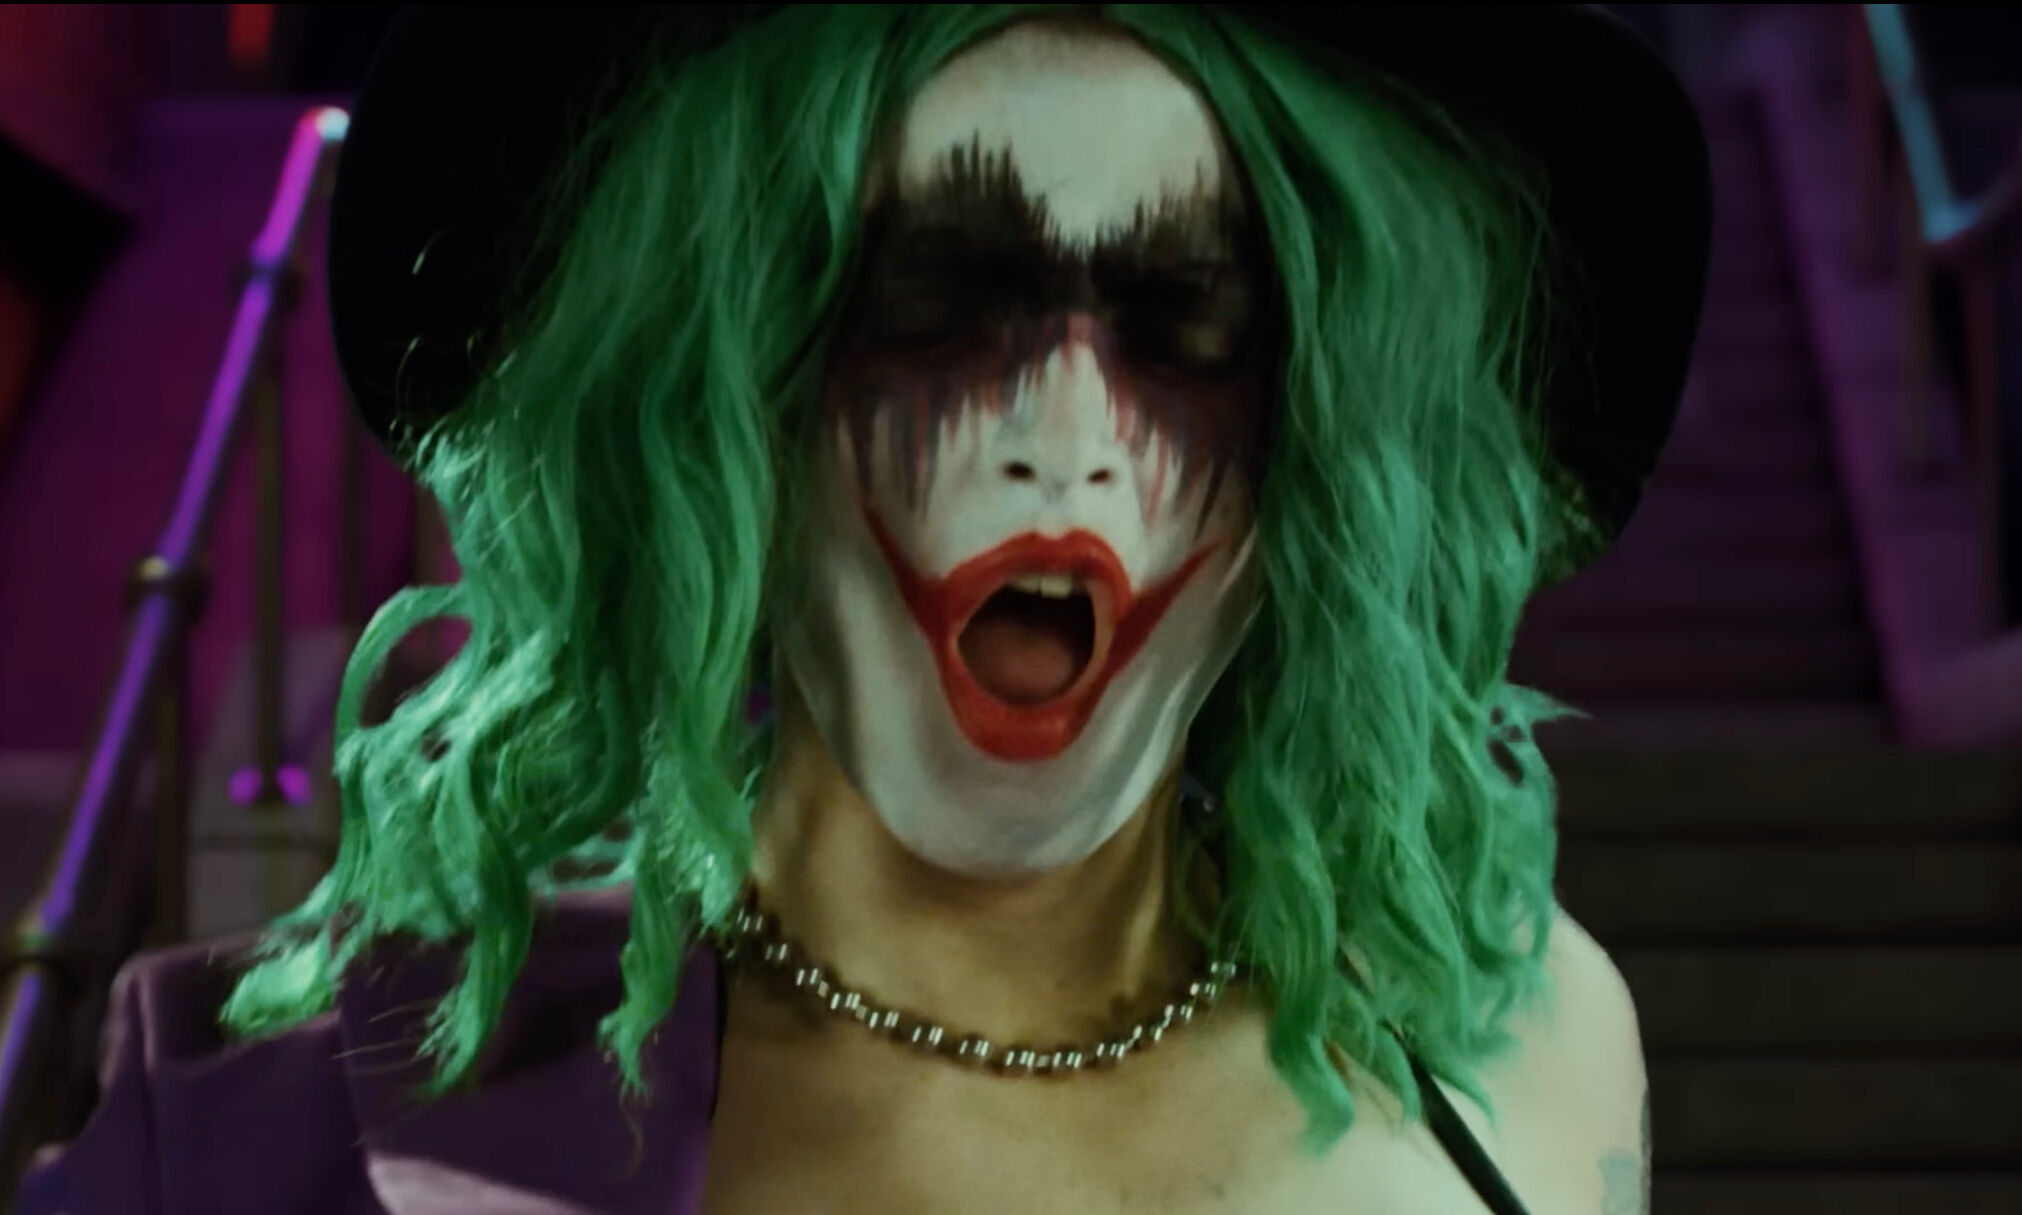 A transgender Joker film has been pulled from the Toronto International Film Festival